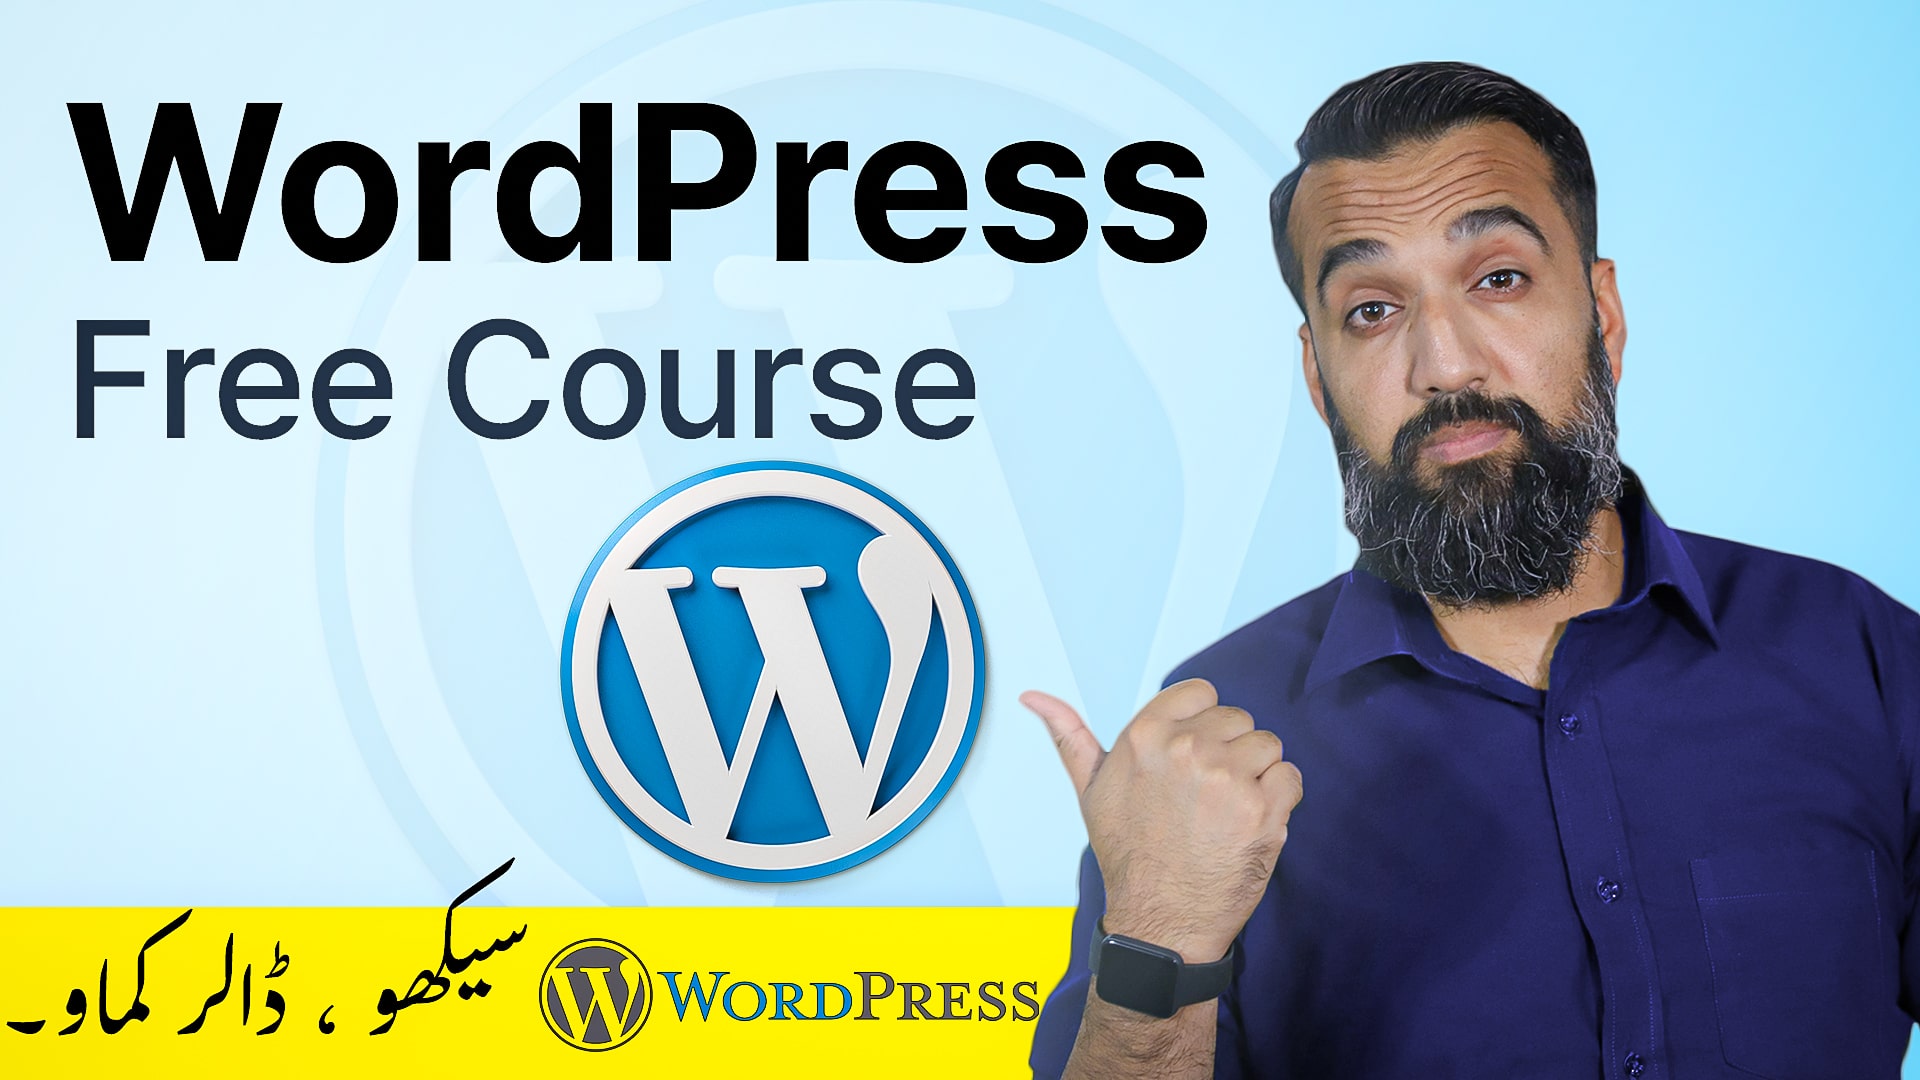  wordpress-course-for-beginners-by-azadchaiwala-64f85a8dedb39849613700.jpg 